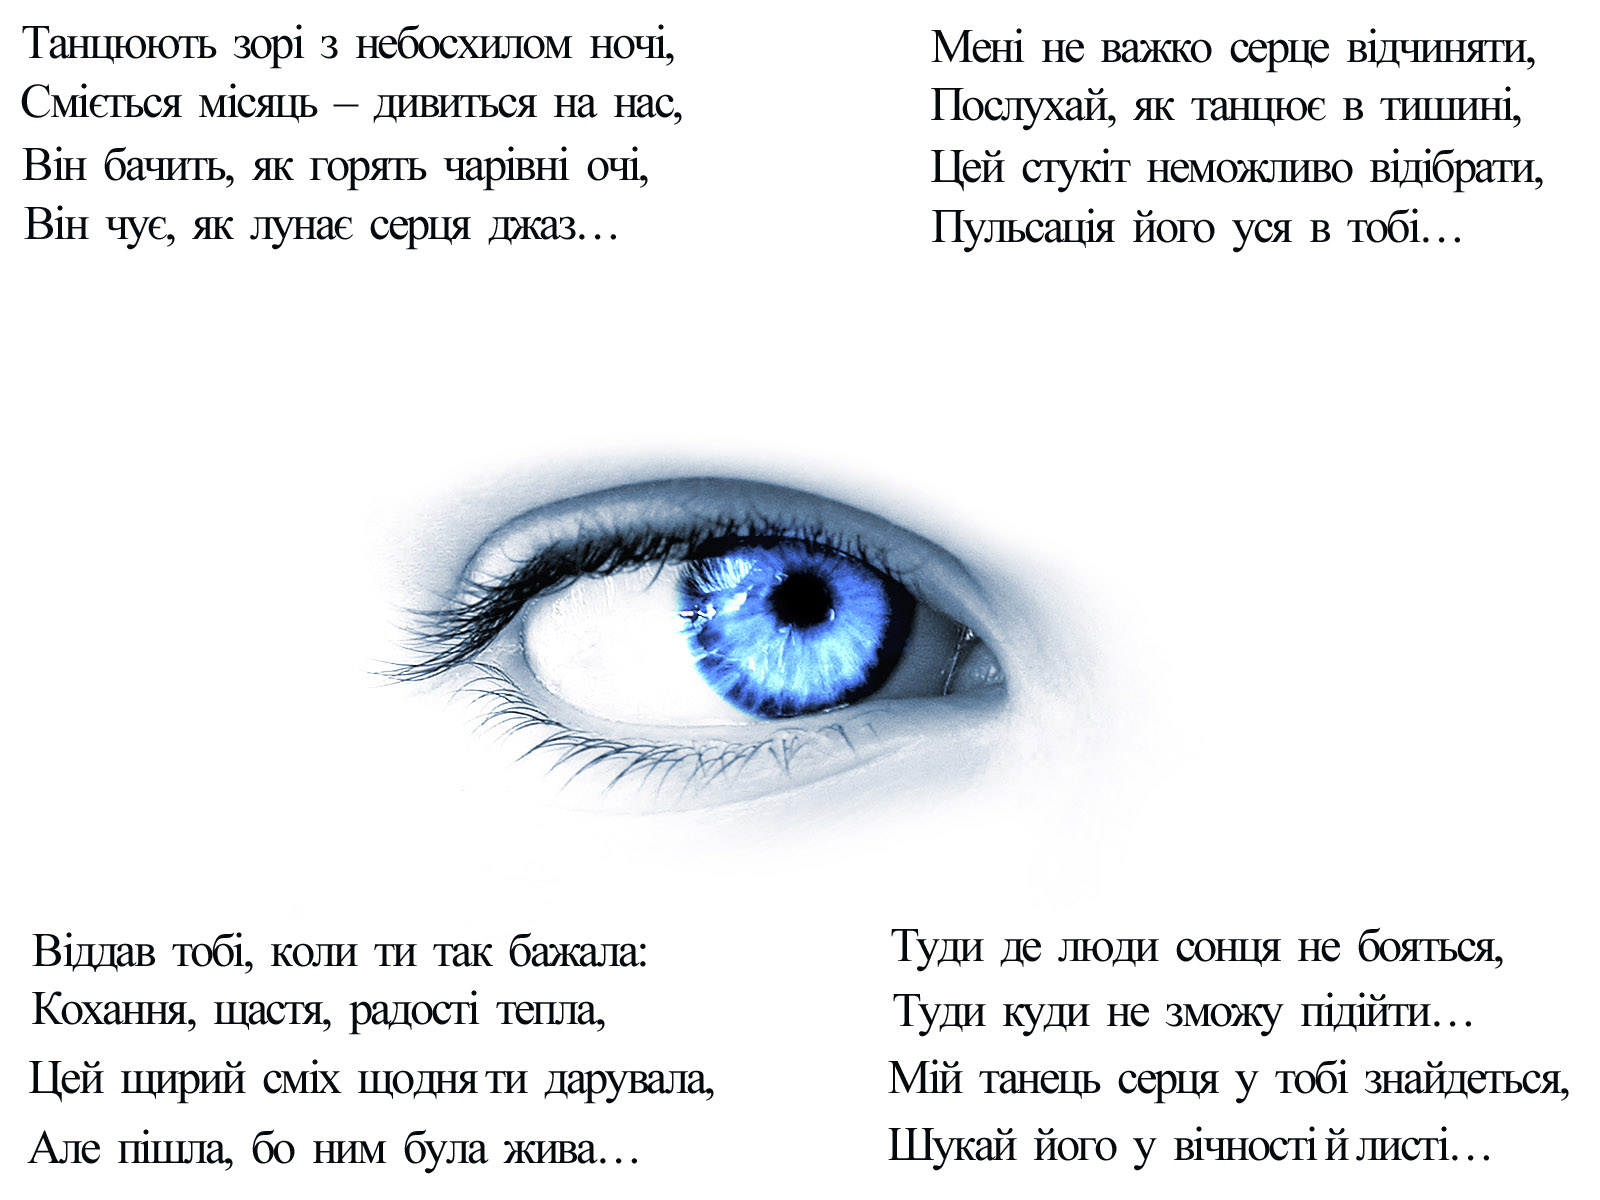 Глаза твои глазки. Стихотворение про глаза. Стих про красивые глаза. Стихи про глаза девушки. Стихи про взгляд.